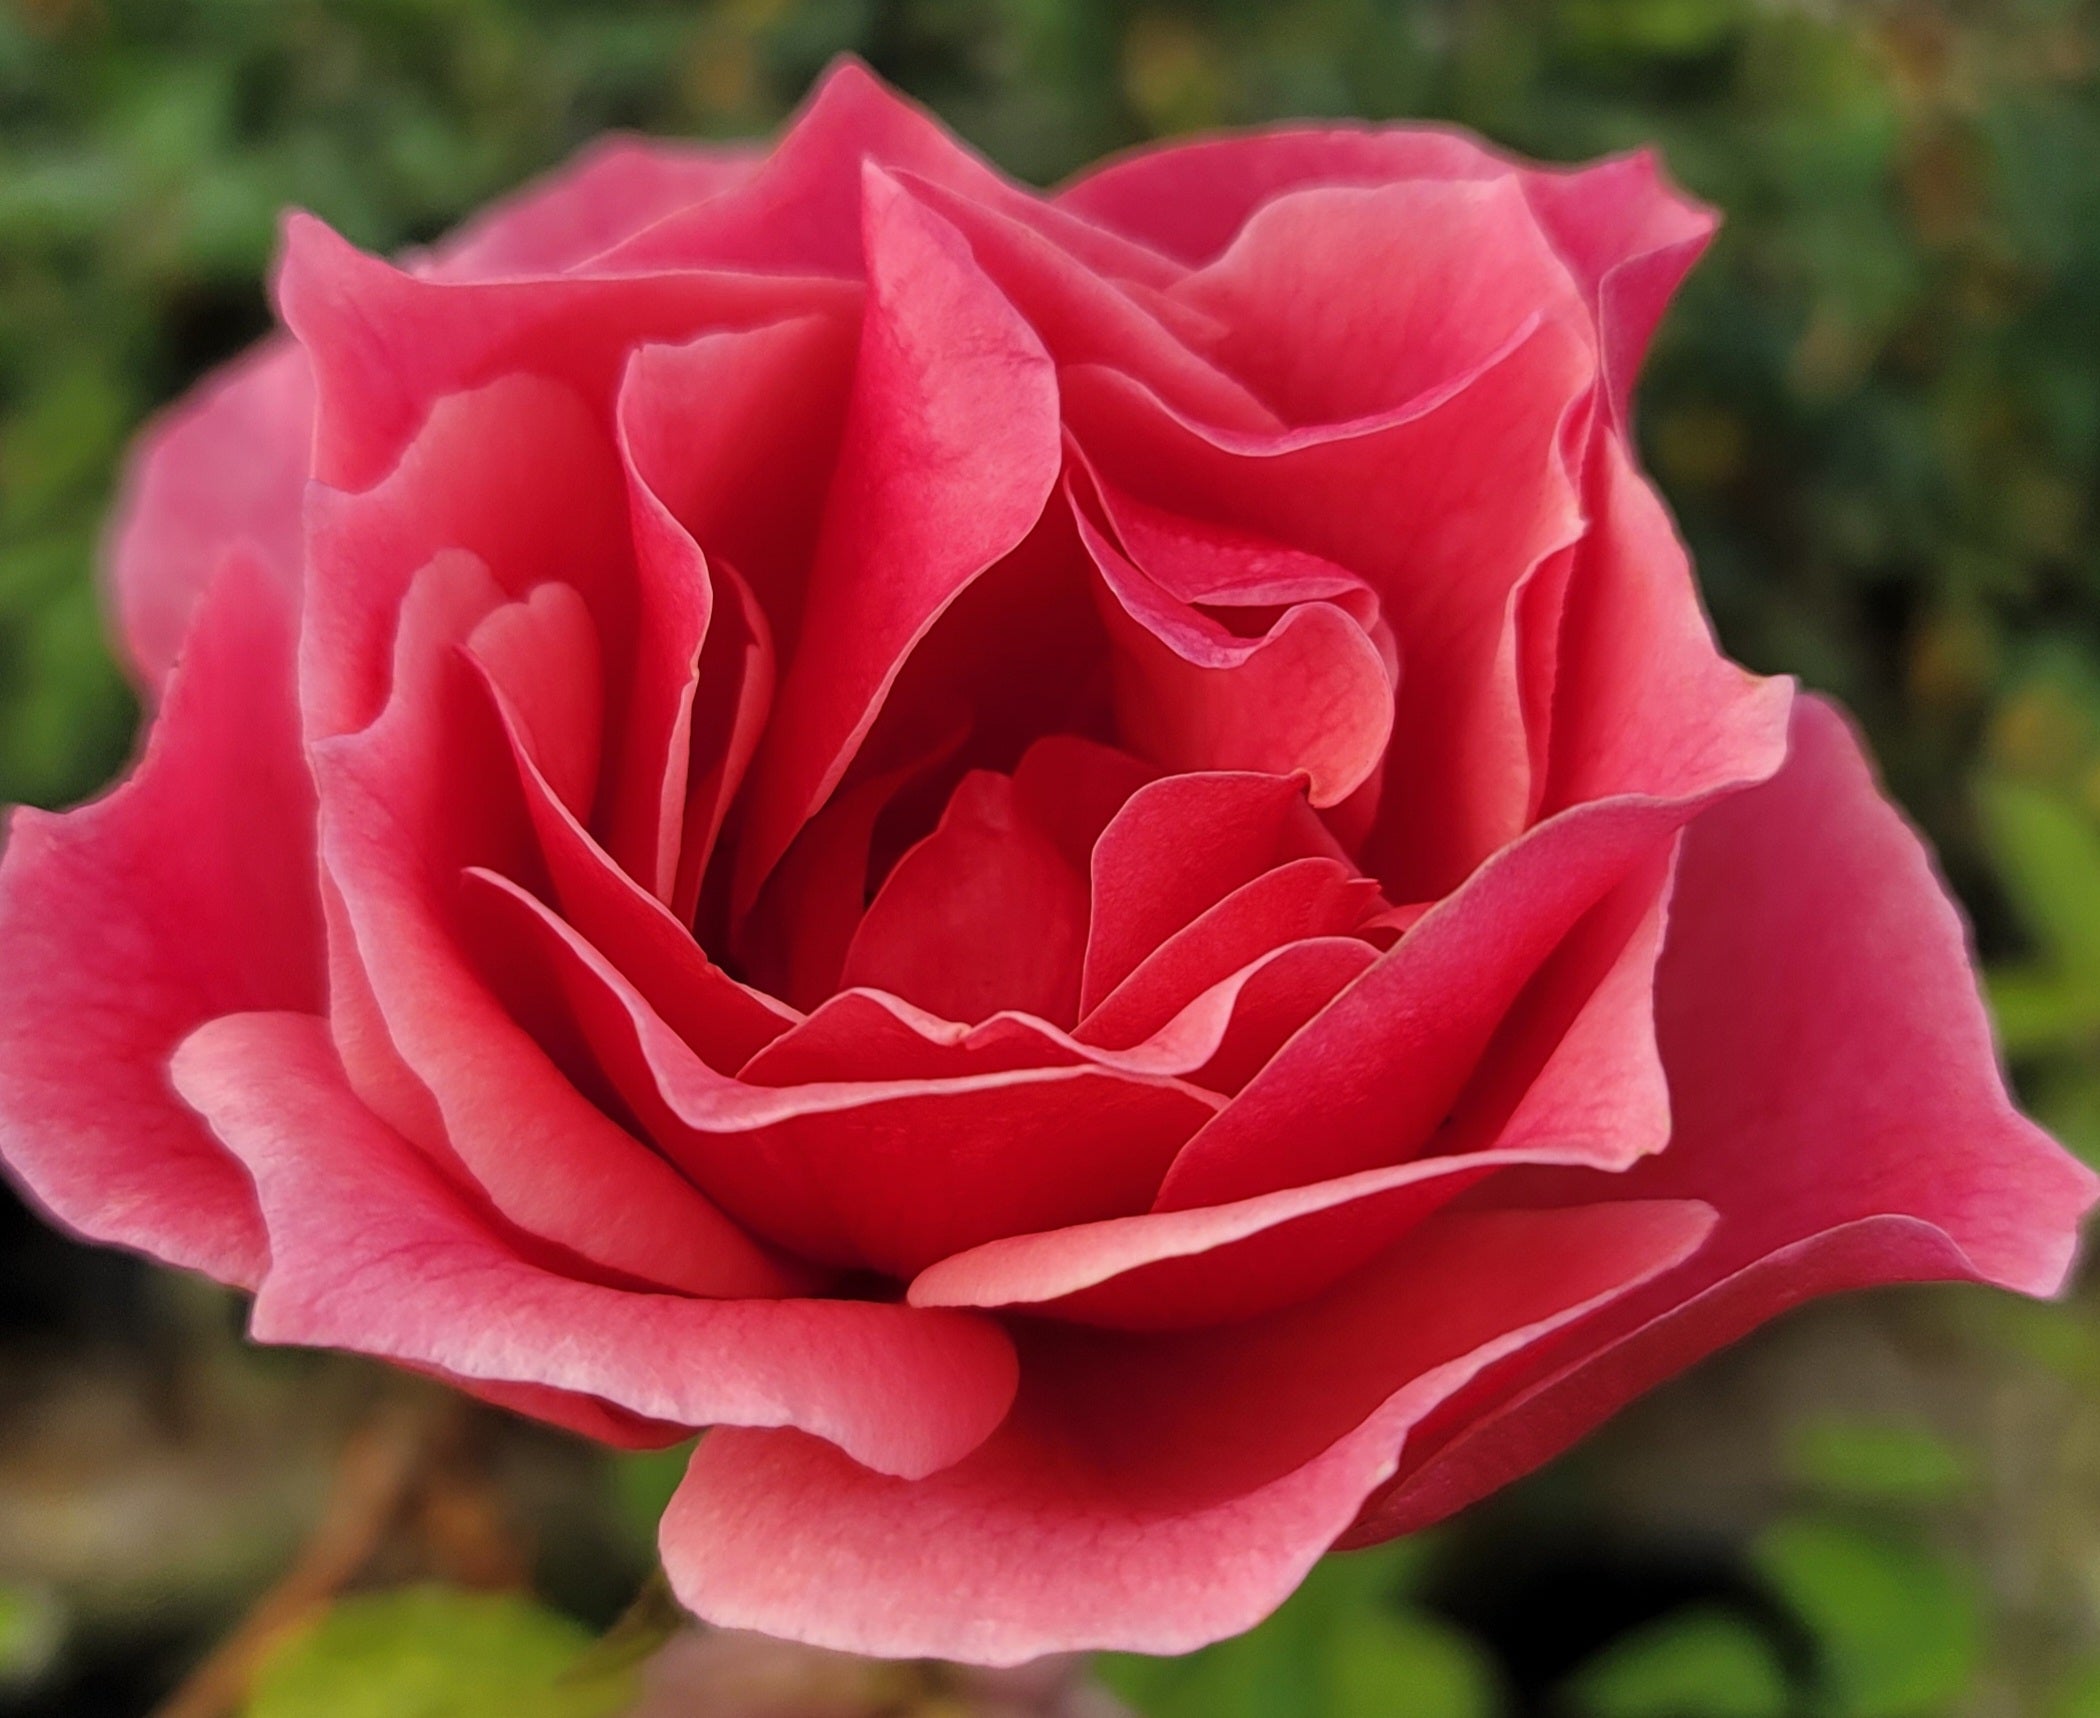 Duet - 2 Quart Rose Potted Live Plant - Ma Cherie Roses